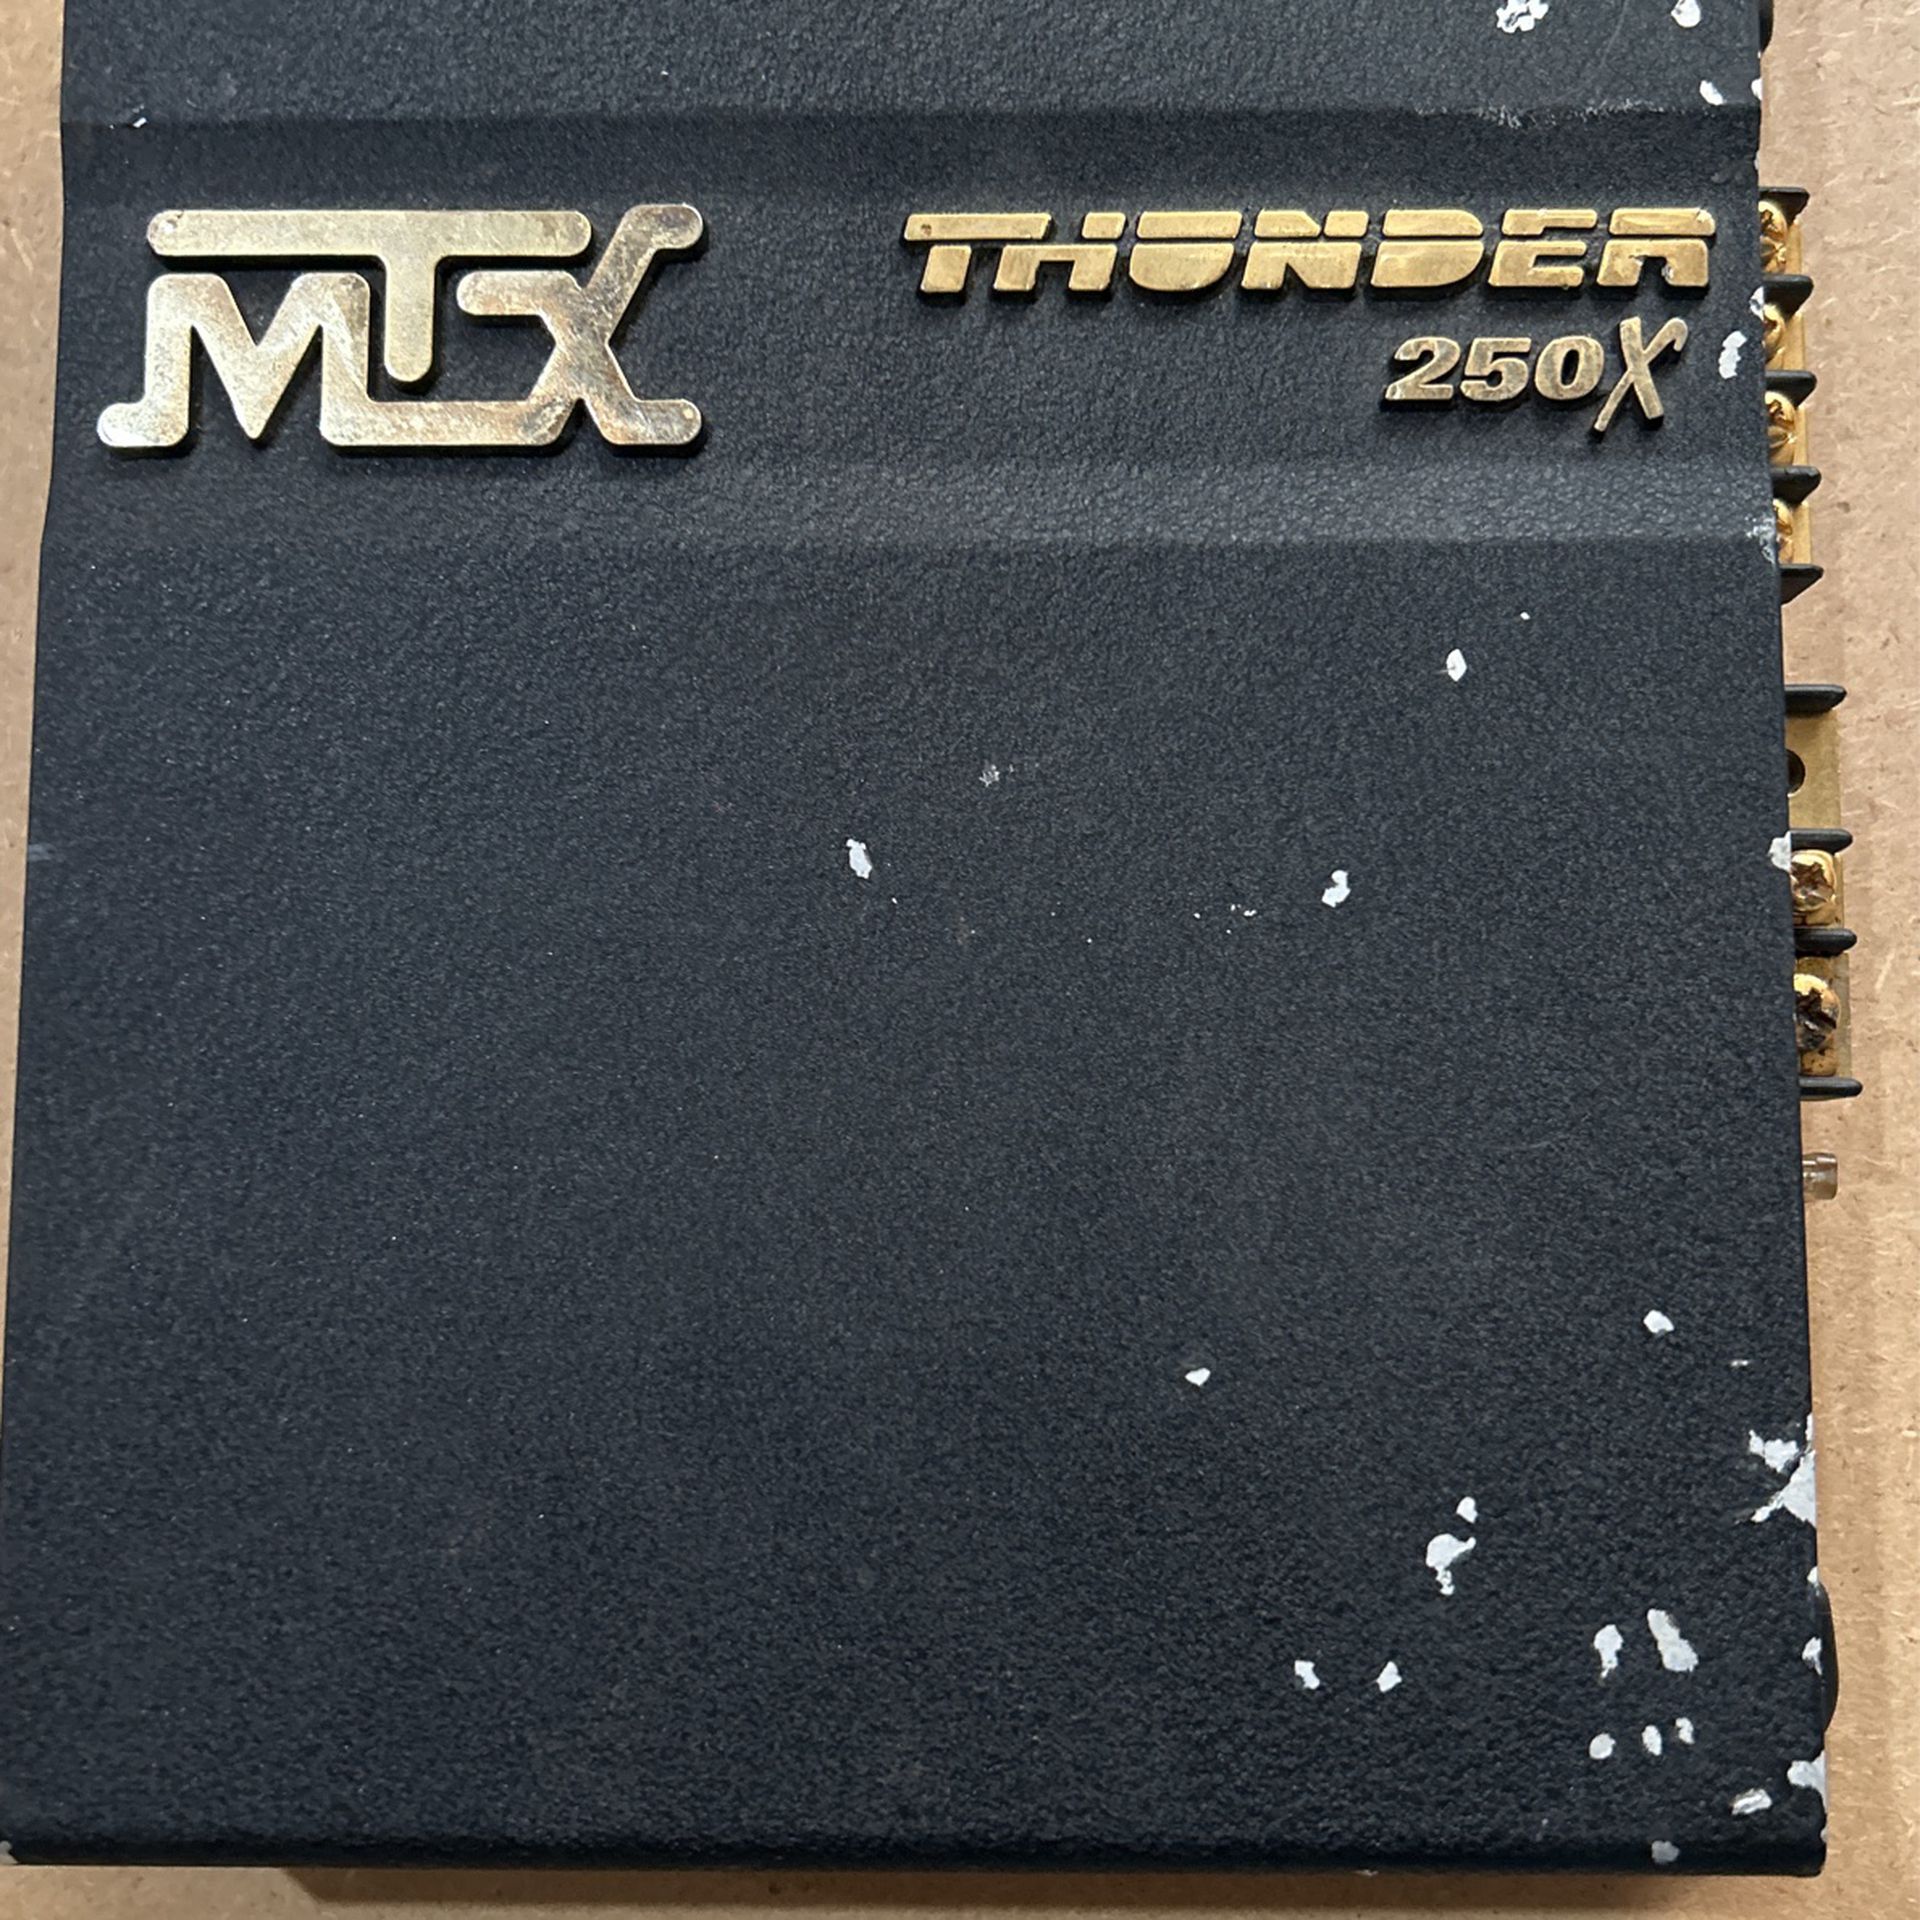 MTX Thunder 250X car Amplifier